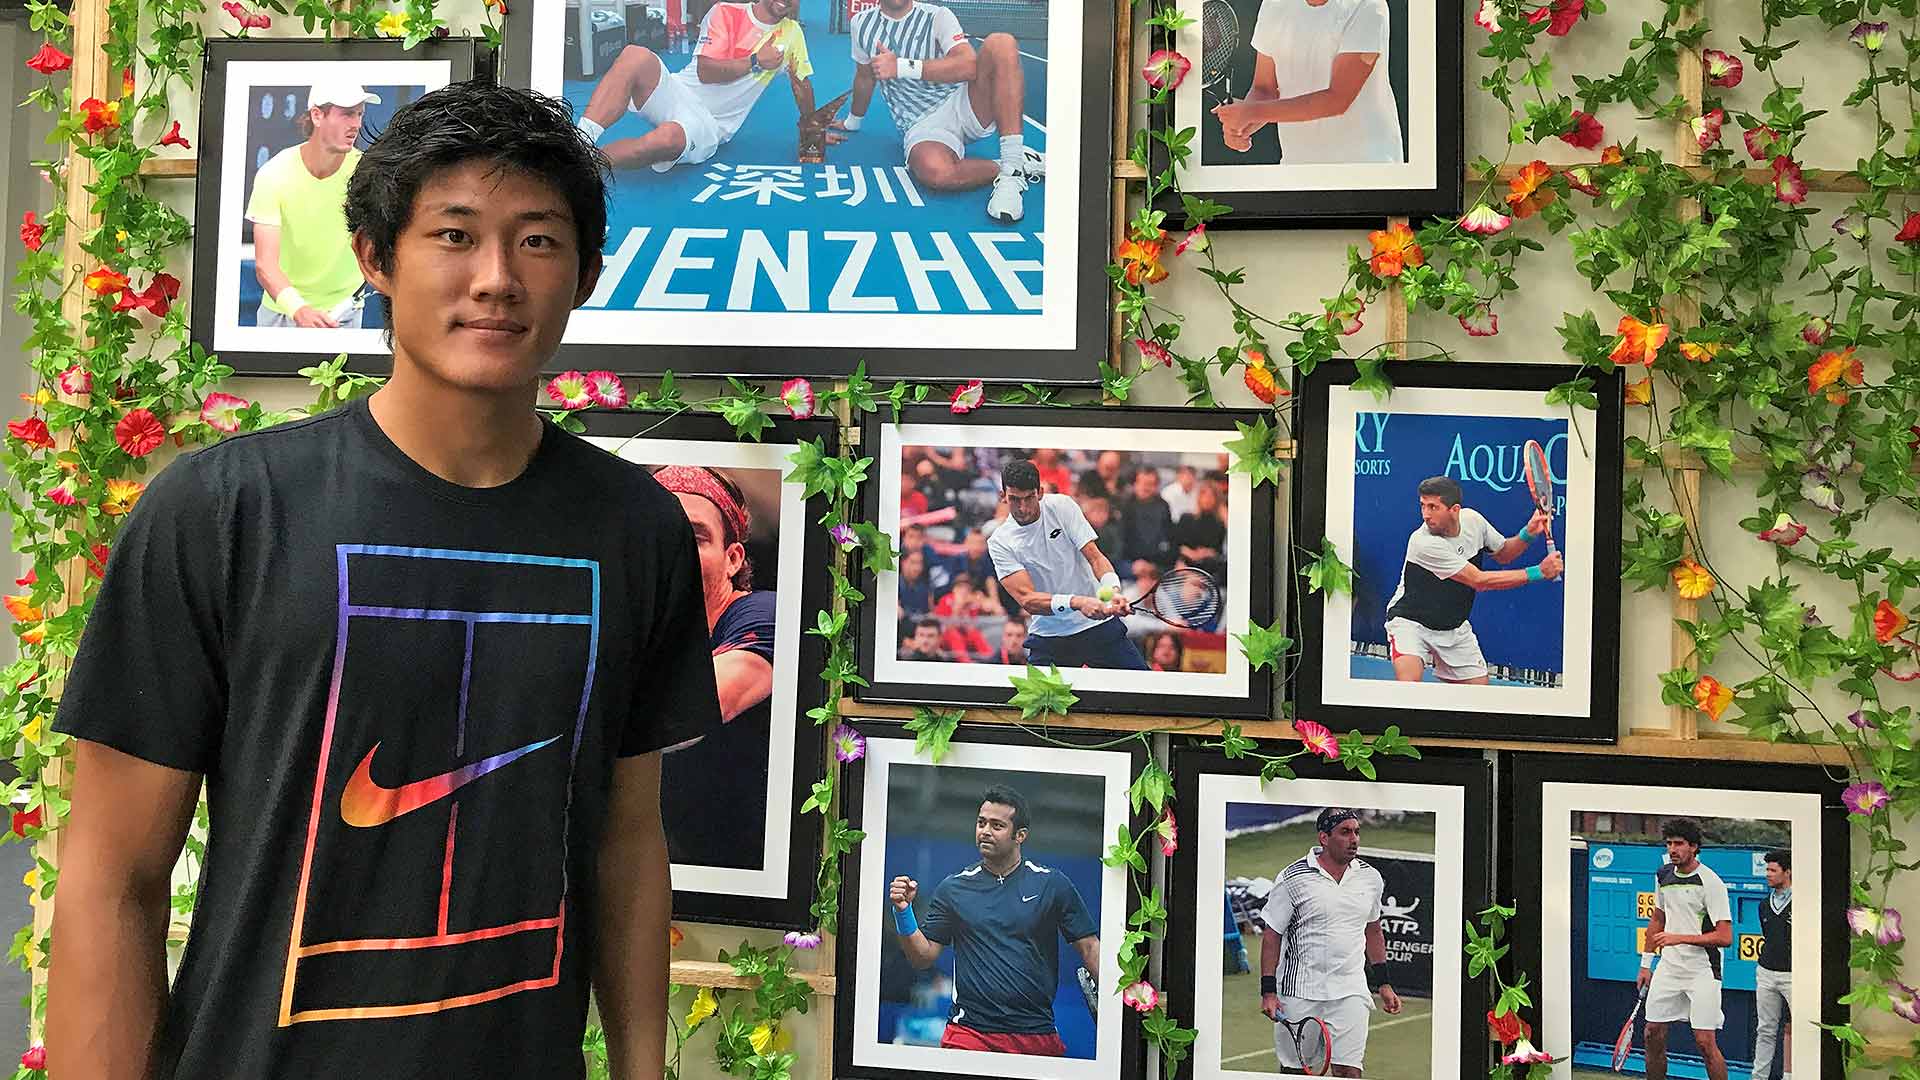 Zhizhen Zhang will contest his first ATP World Tour quarter-final Friday.